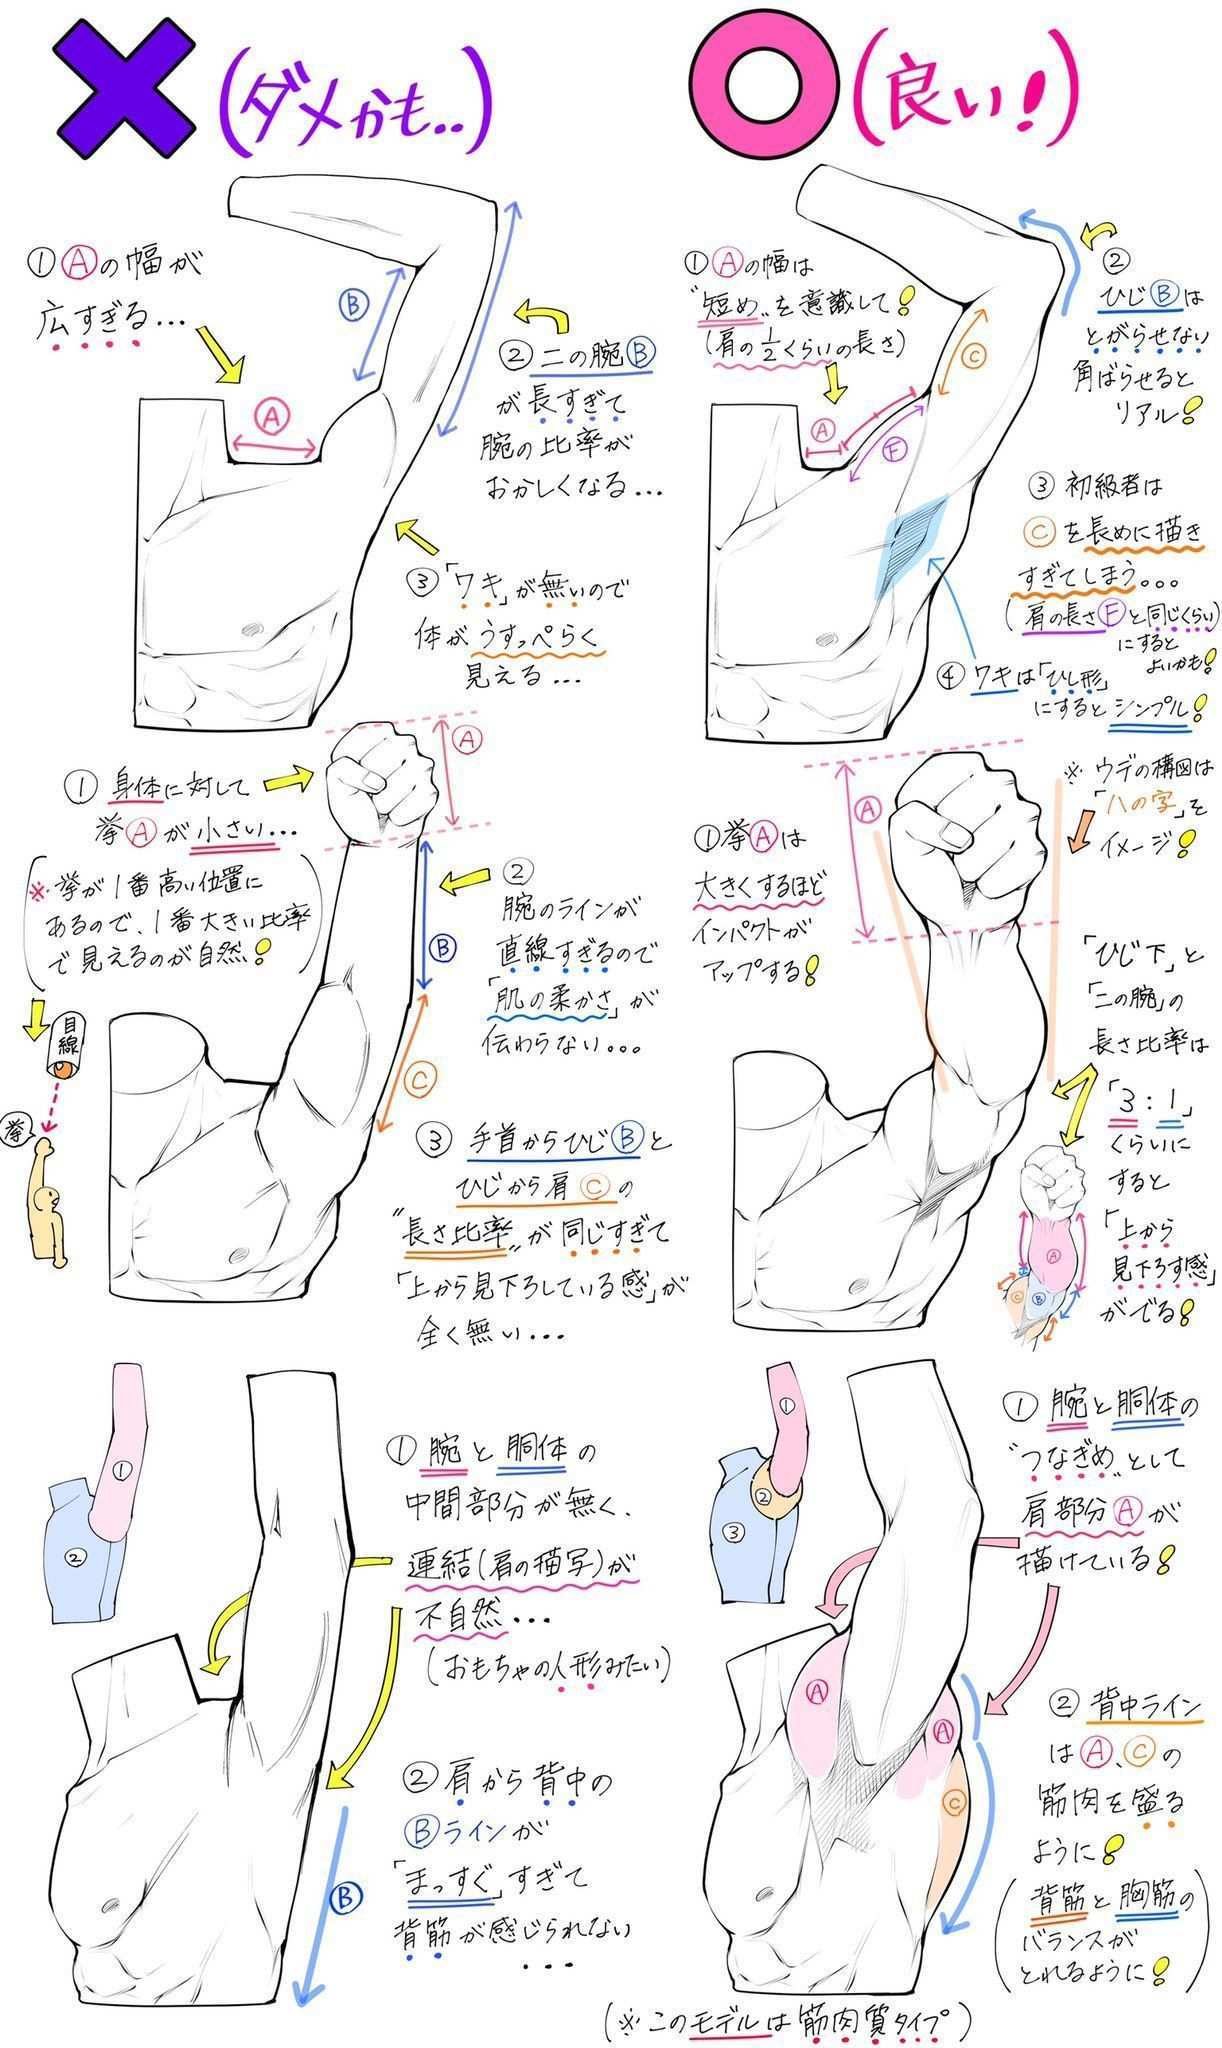 Meeee Male Body Meeee Male Body Body Drawingtips Drawings Illustration In 2020 Mannliche Korper Korper Zeichnen Anatomieverweis